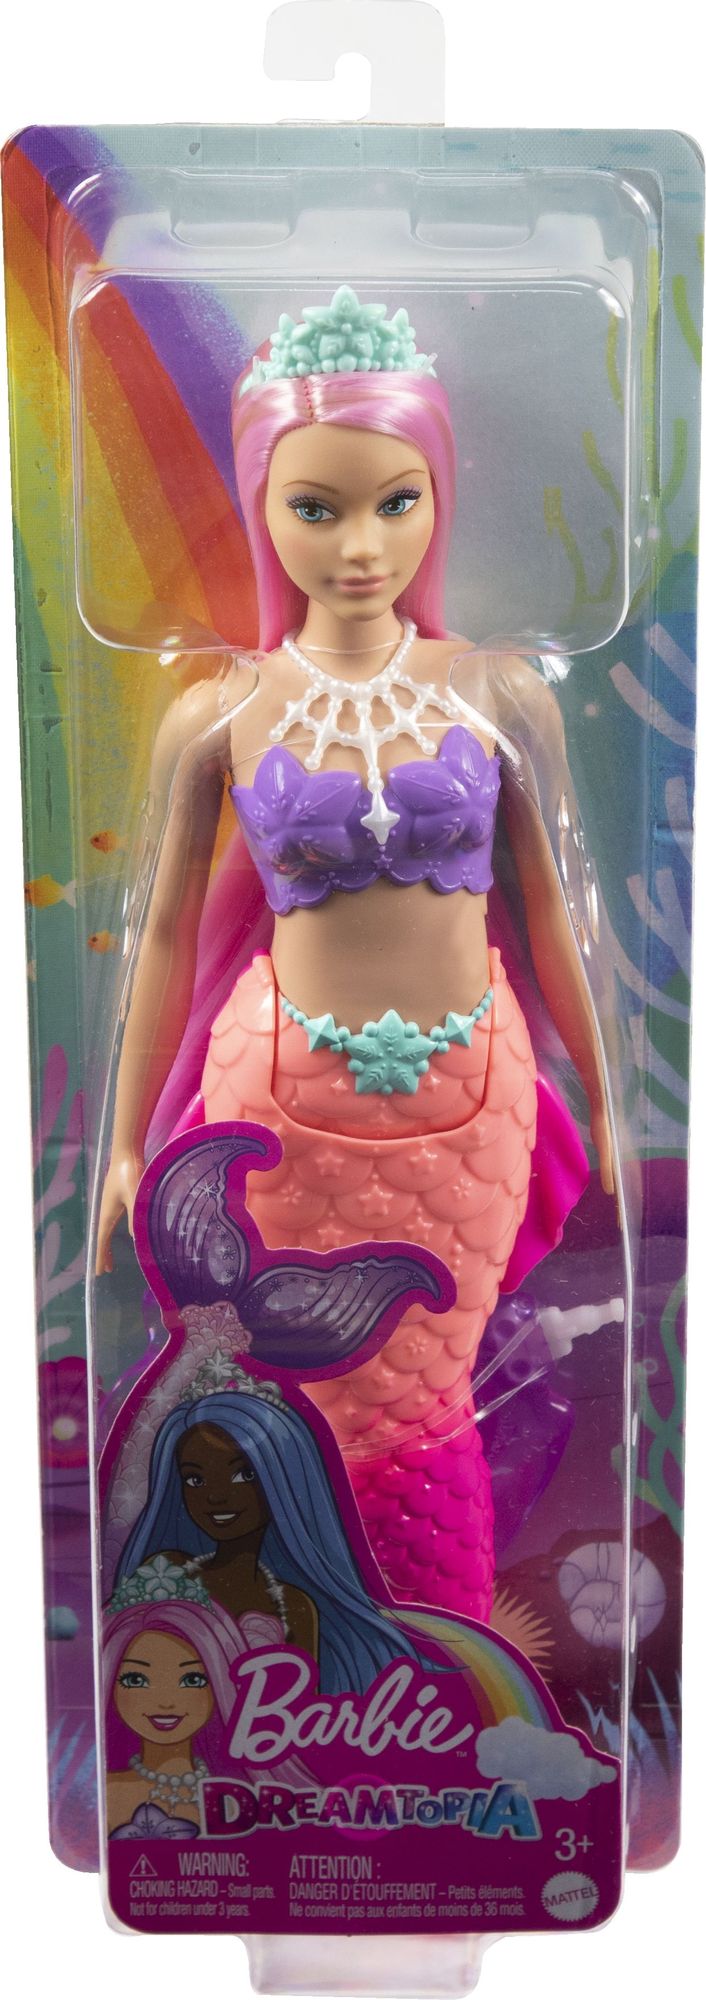 Barbie - Barbie Dreamtopia Meerjungfrau-Puppe\' kaufen - Spielwaren